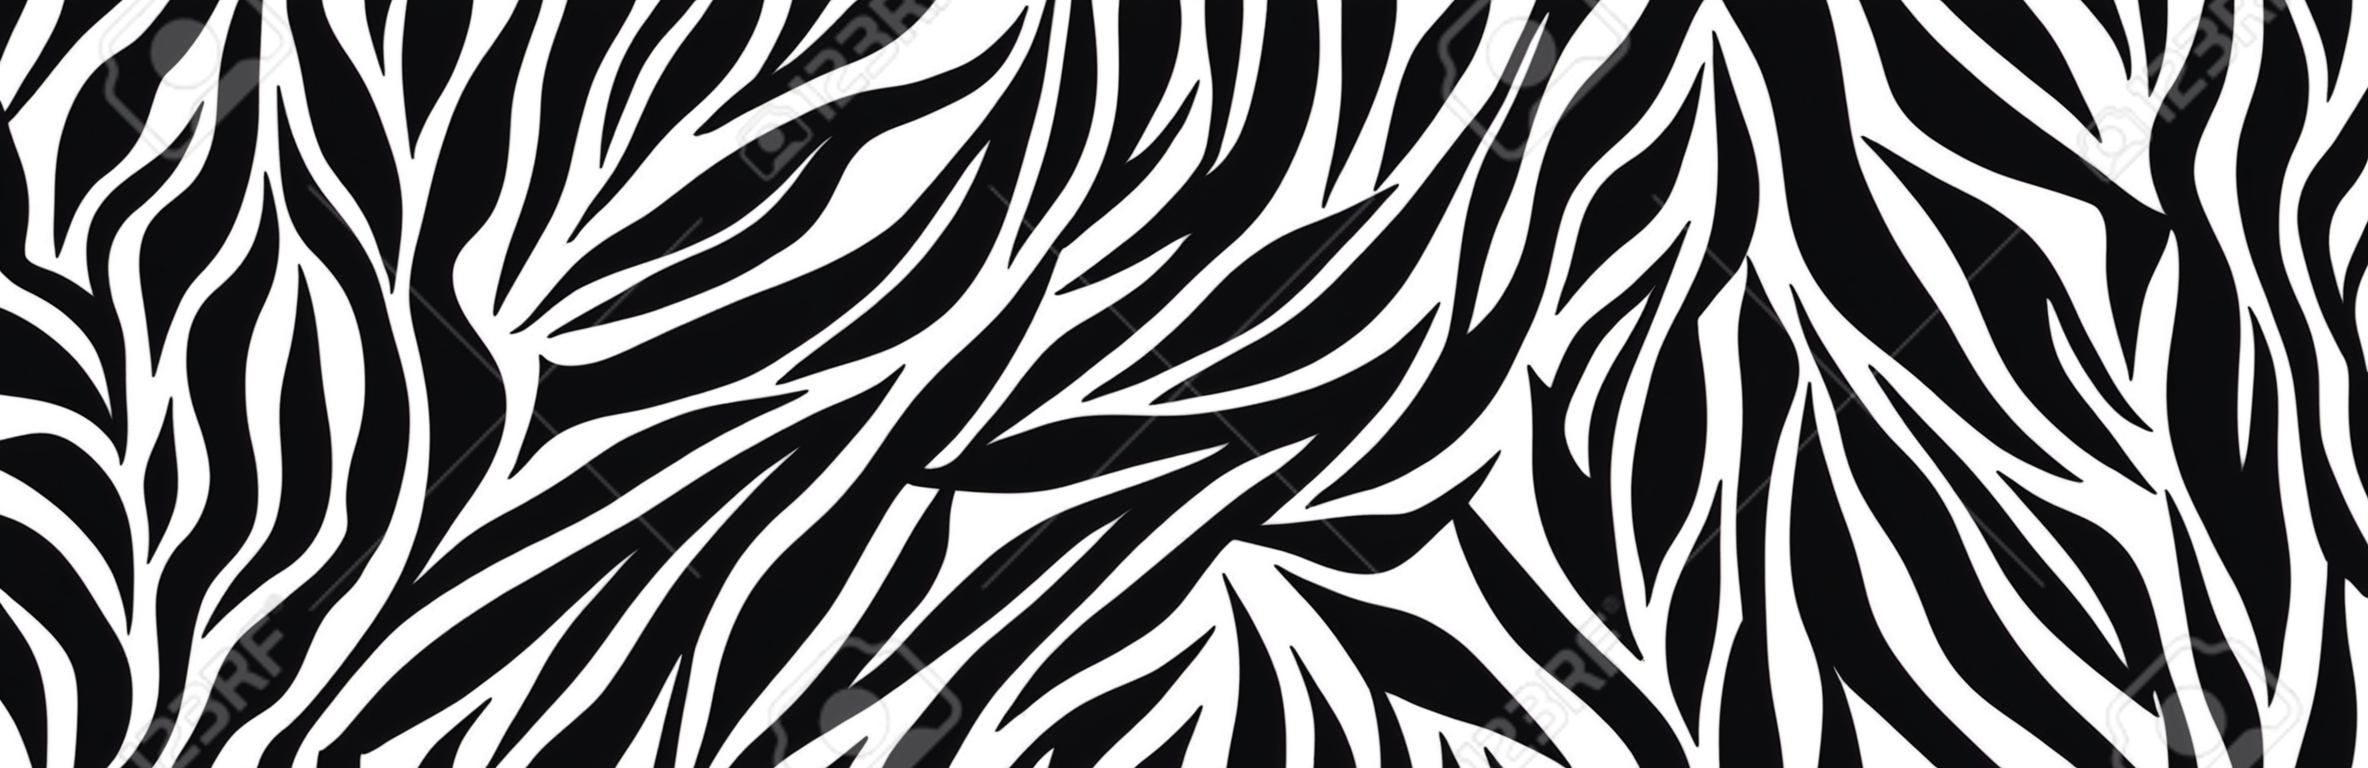 Motivo zebrato, elegante trama a strisce. Stampa naturale animale. Per la progettazione di carta da parati, tessuti, copertine. Fondo senza cuciture di vettore